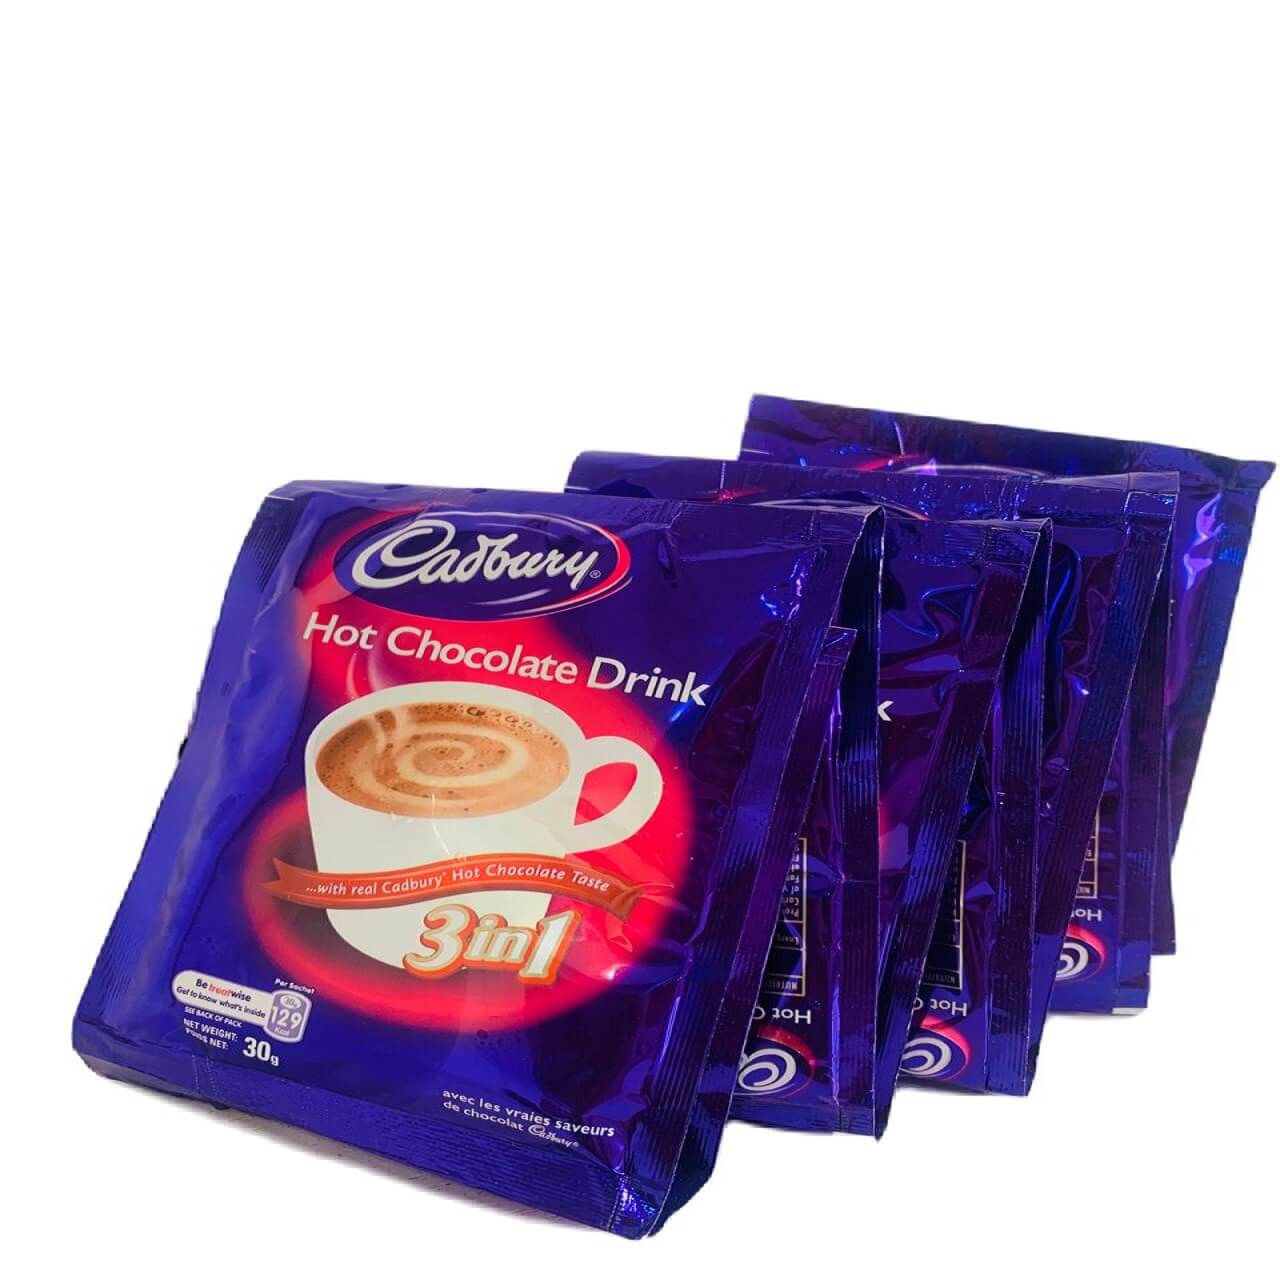 Sachets of cadbury hot chocolate drink, 3in 1